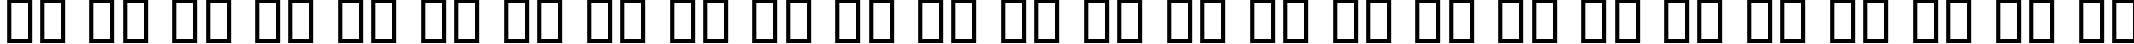 Пример написания английского алфавита шрифтом B Elm Italic